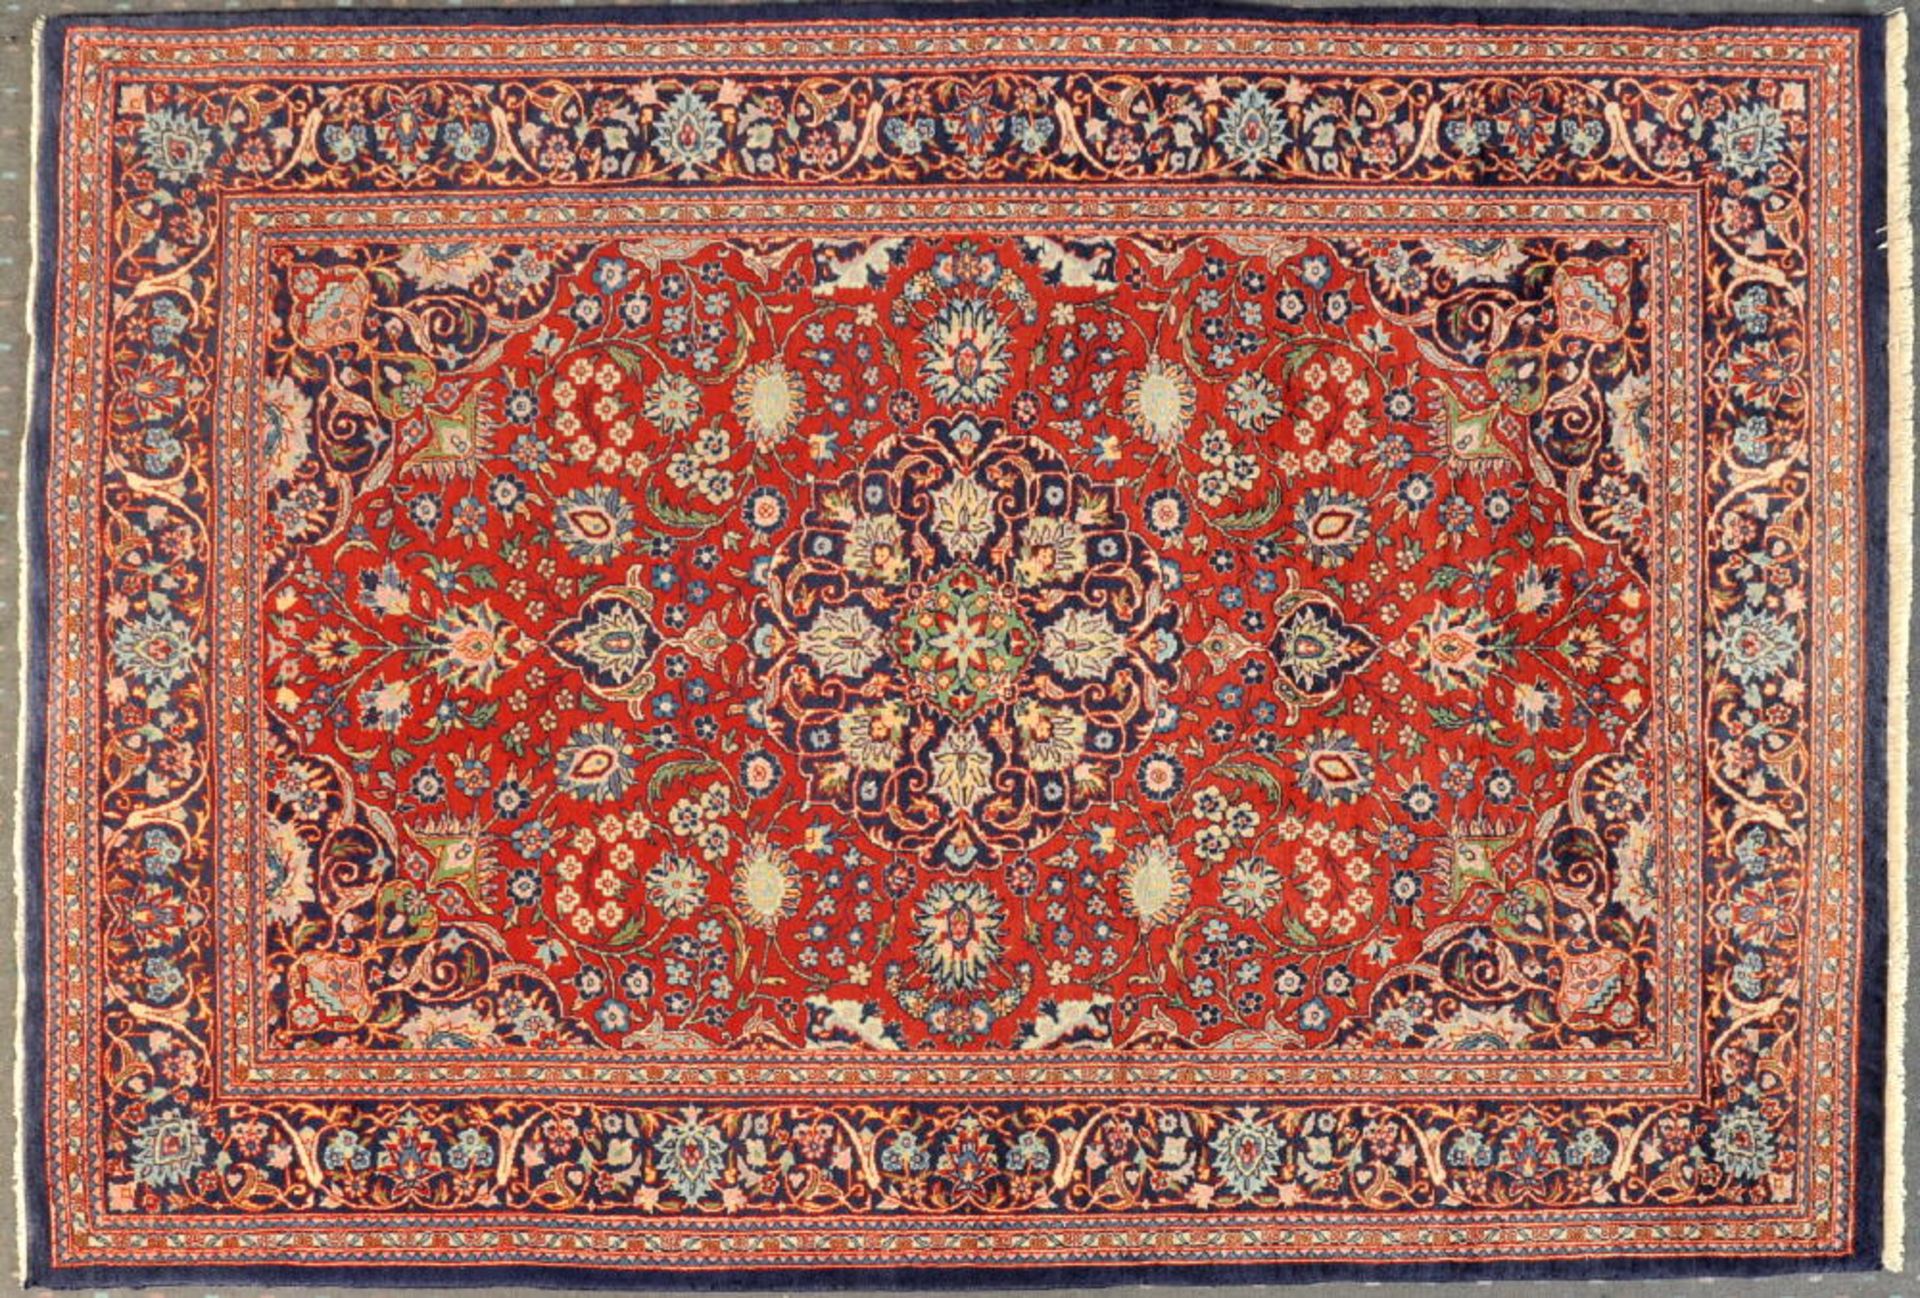 Keschan, 125 x 182 cmälter, Wolle, feine Knüpfung, rotgrundig, mehrfarb. Medaillon, umgeben von